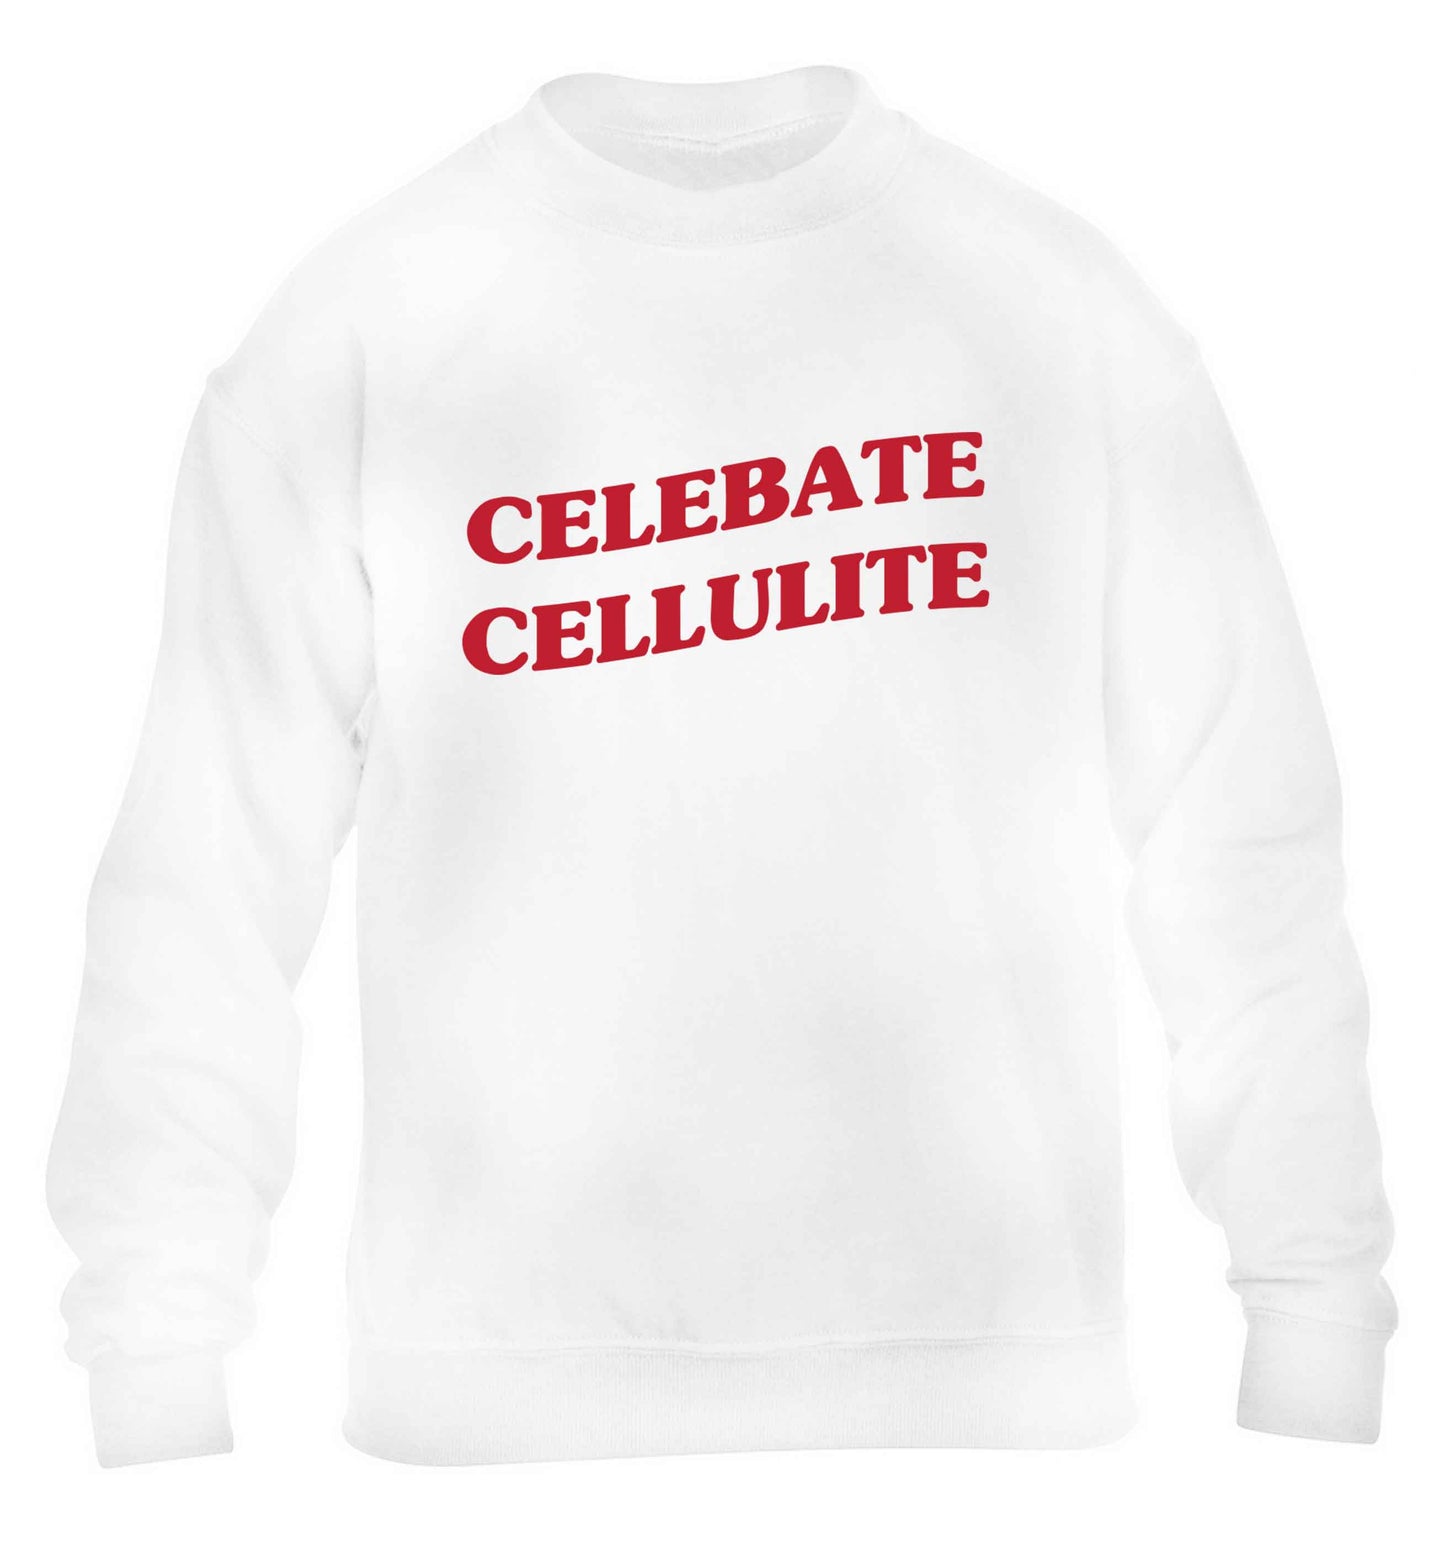 Celebrate cellulite children's white sweater 12-13 Years